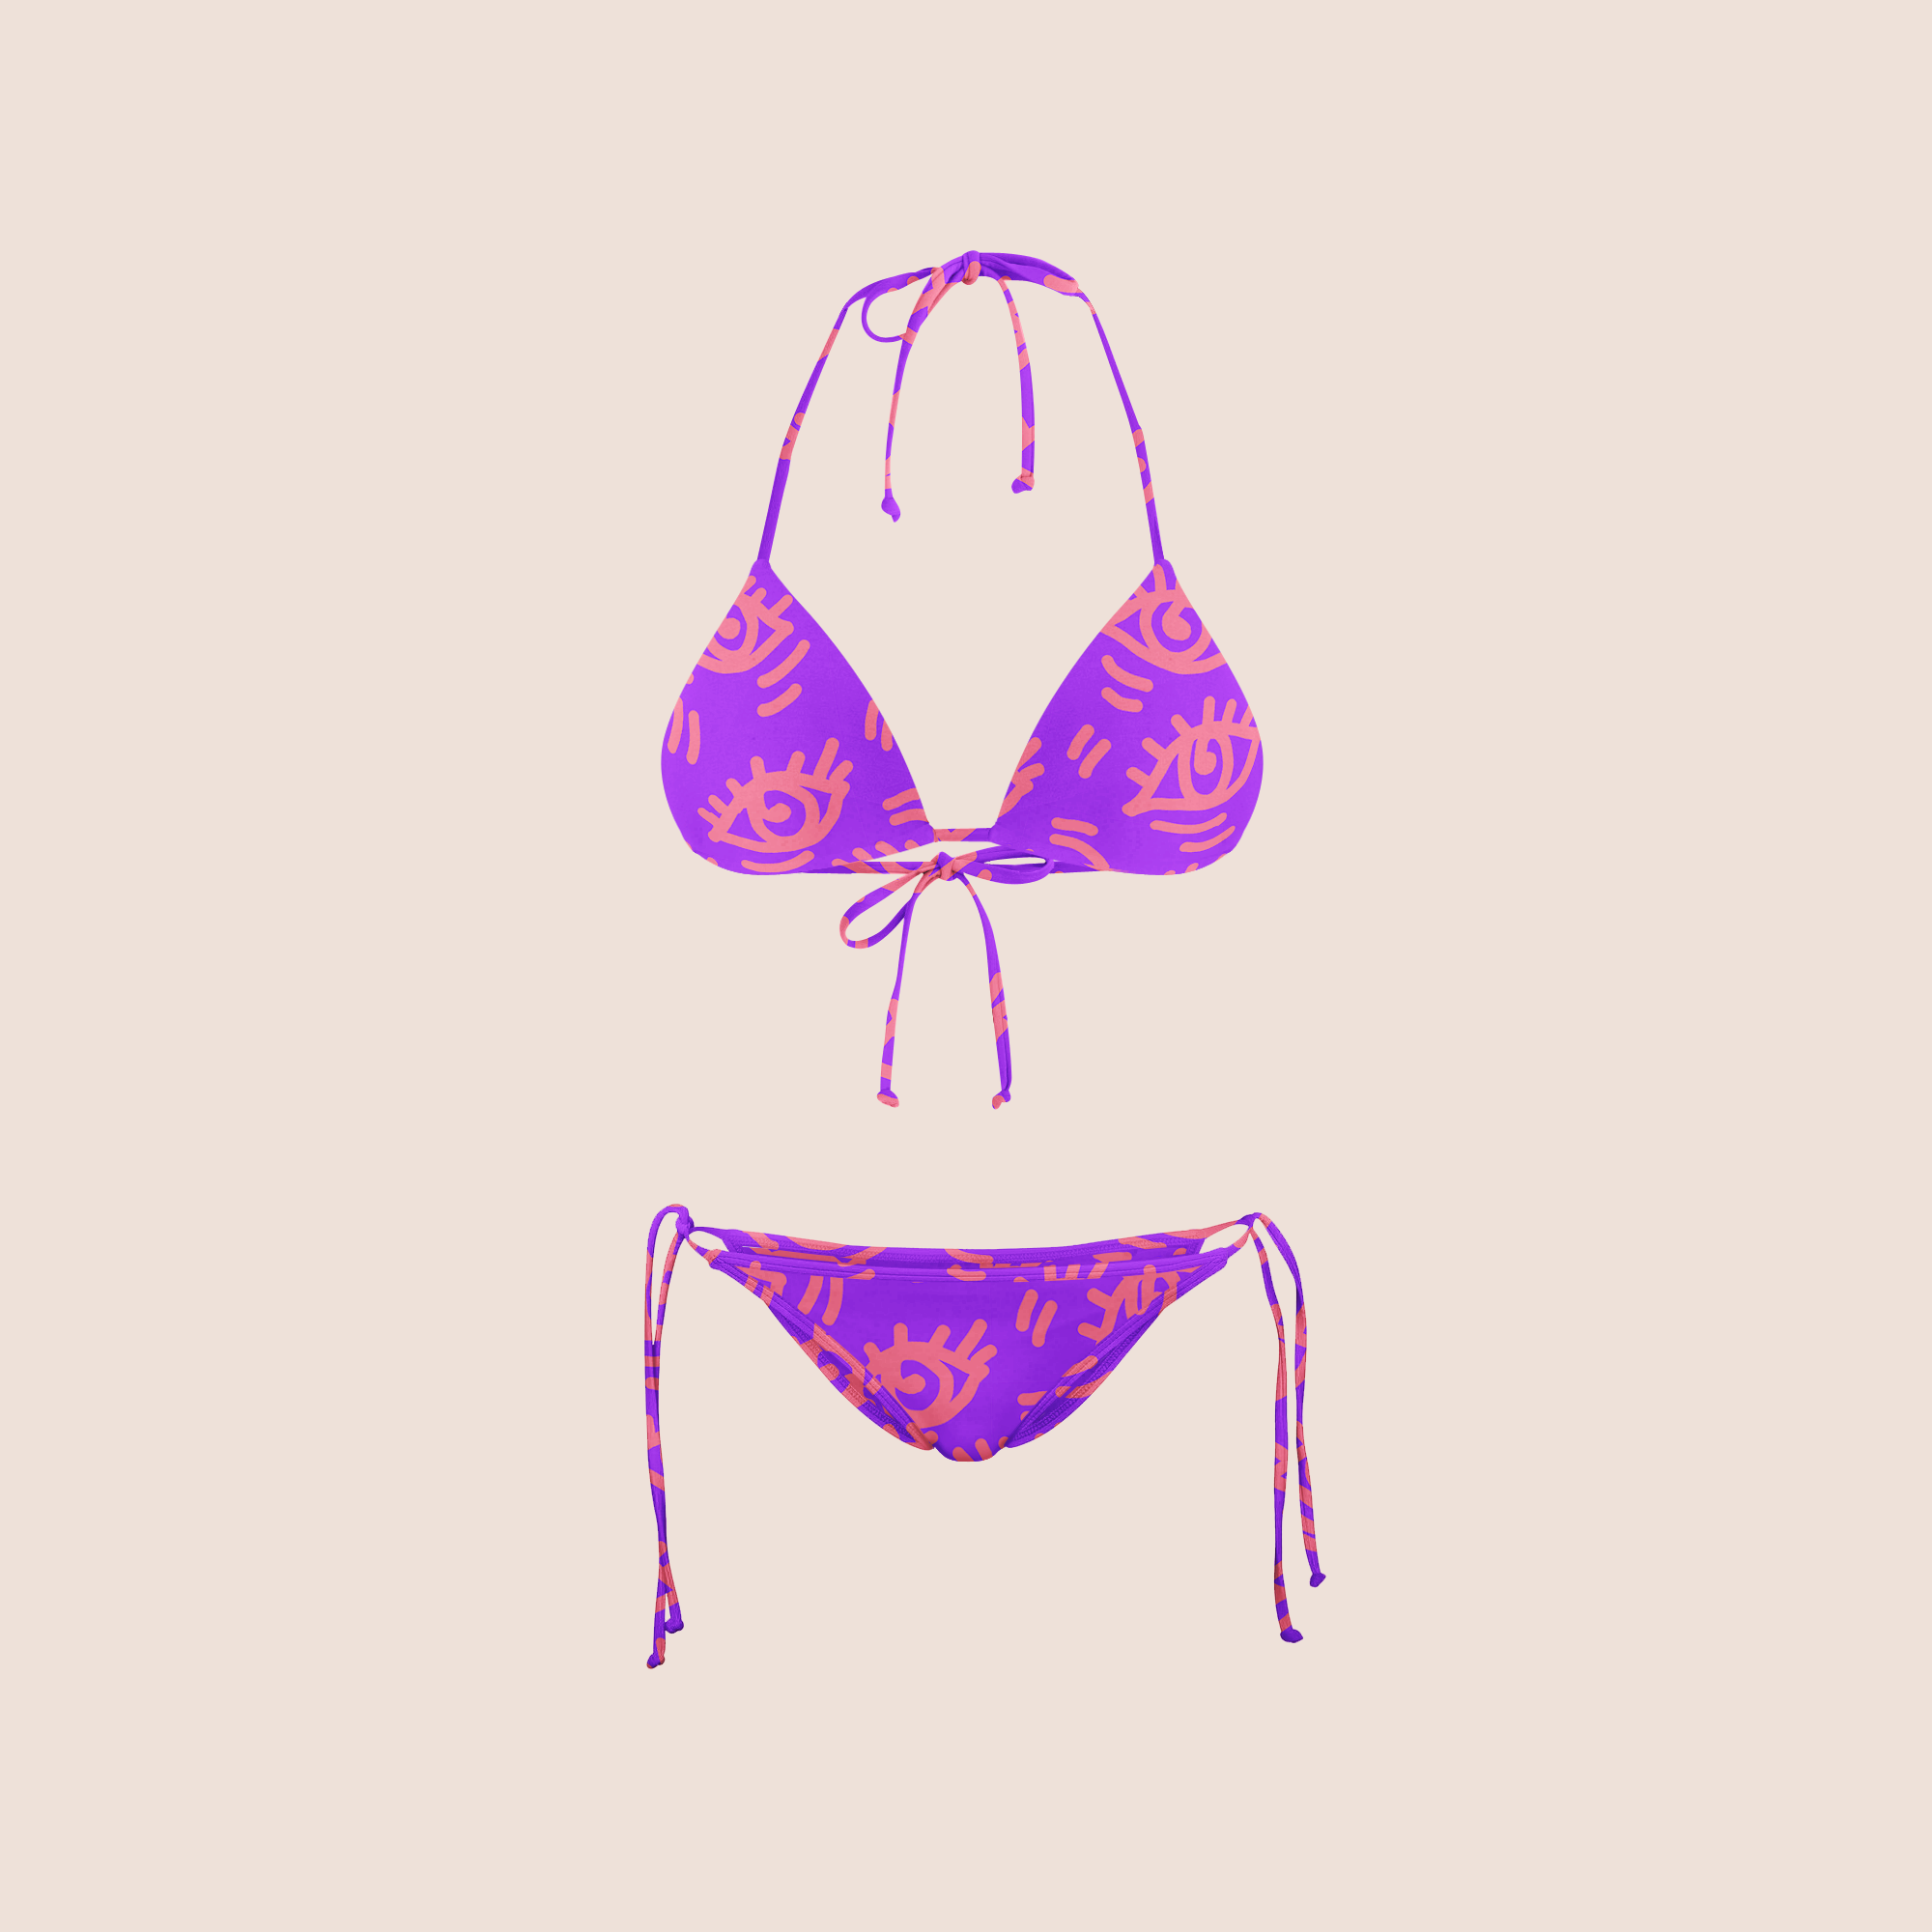 All eyes millennial in purple pattern design printed on recycled fabric bikini mockup